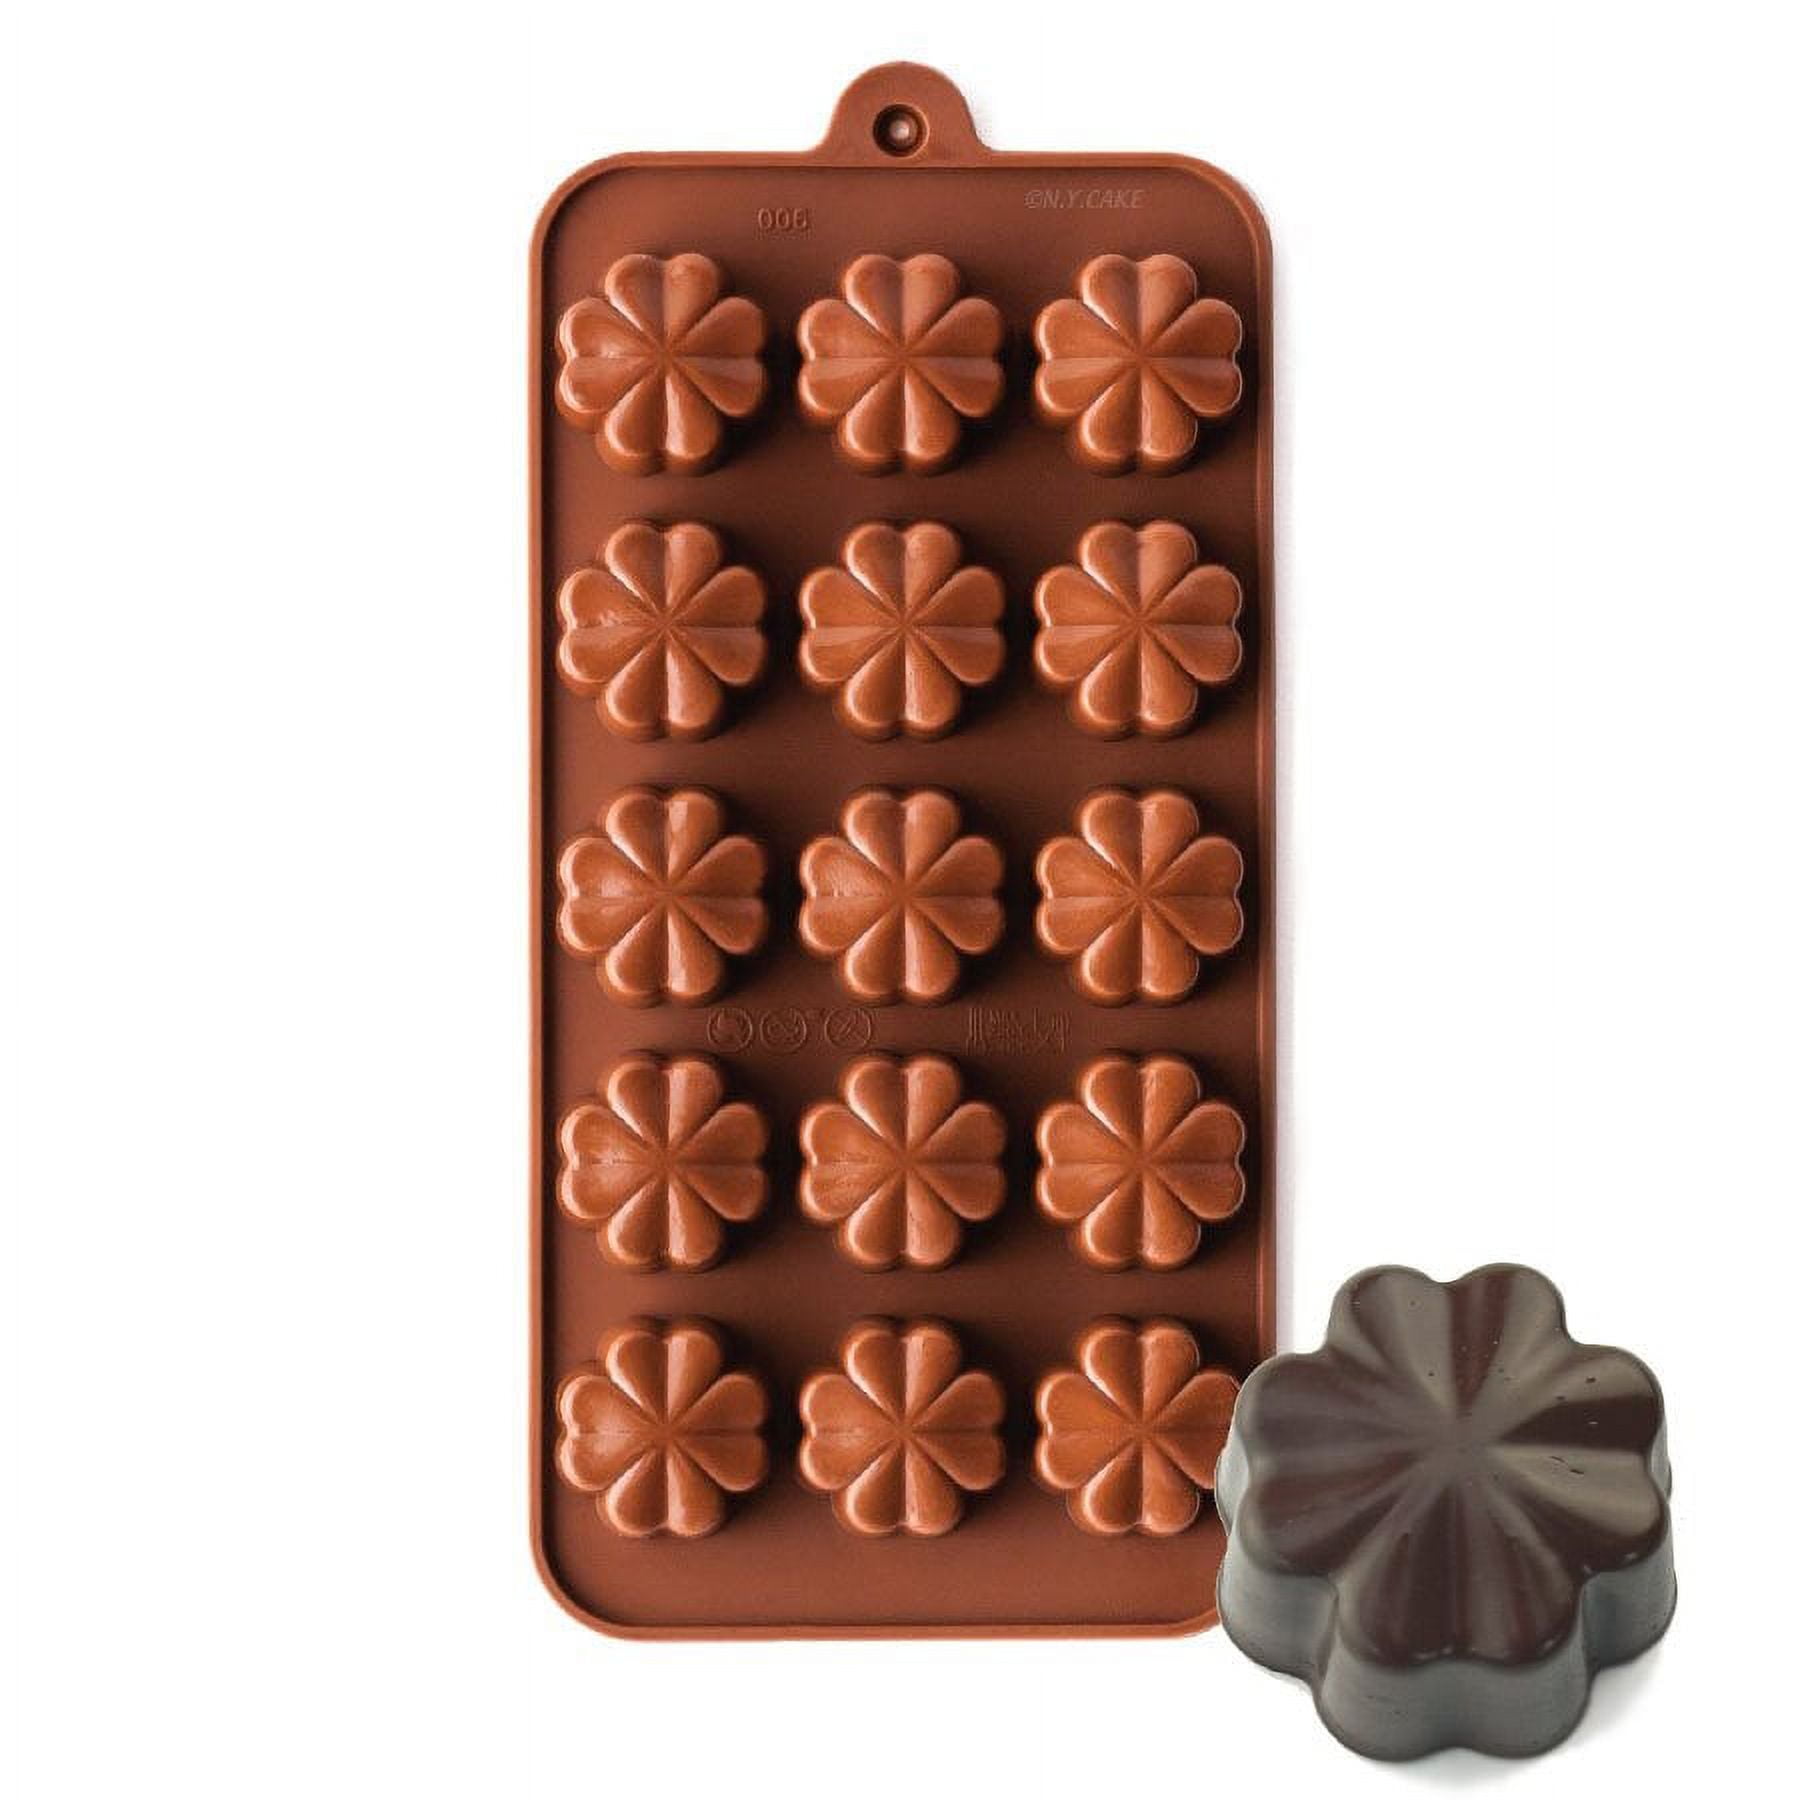 4 x 9 Silicone Brick Candy Mold by STIR